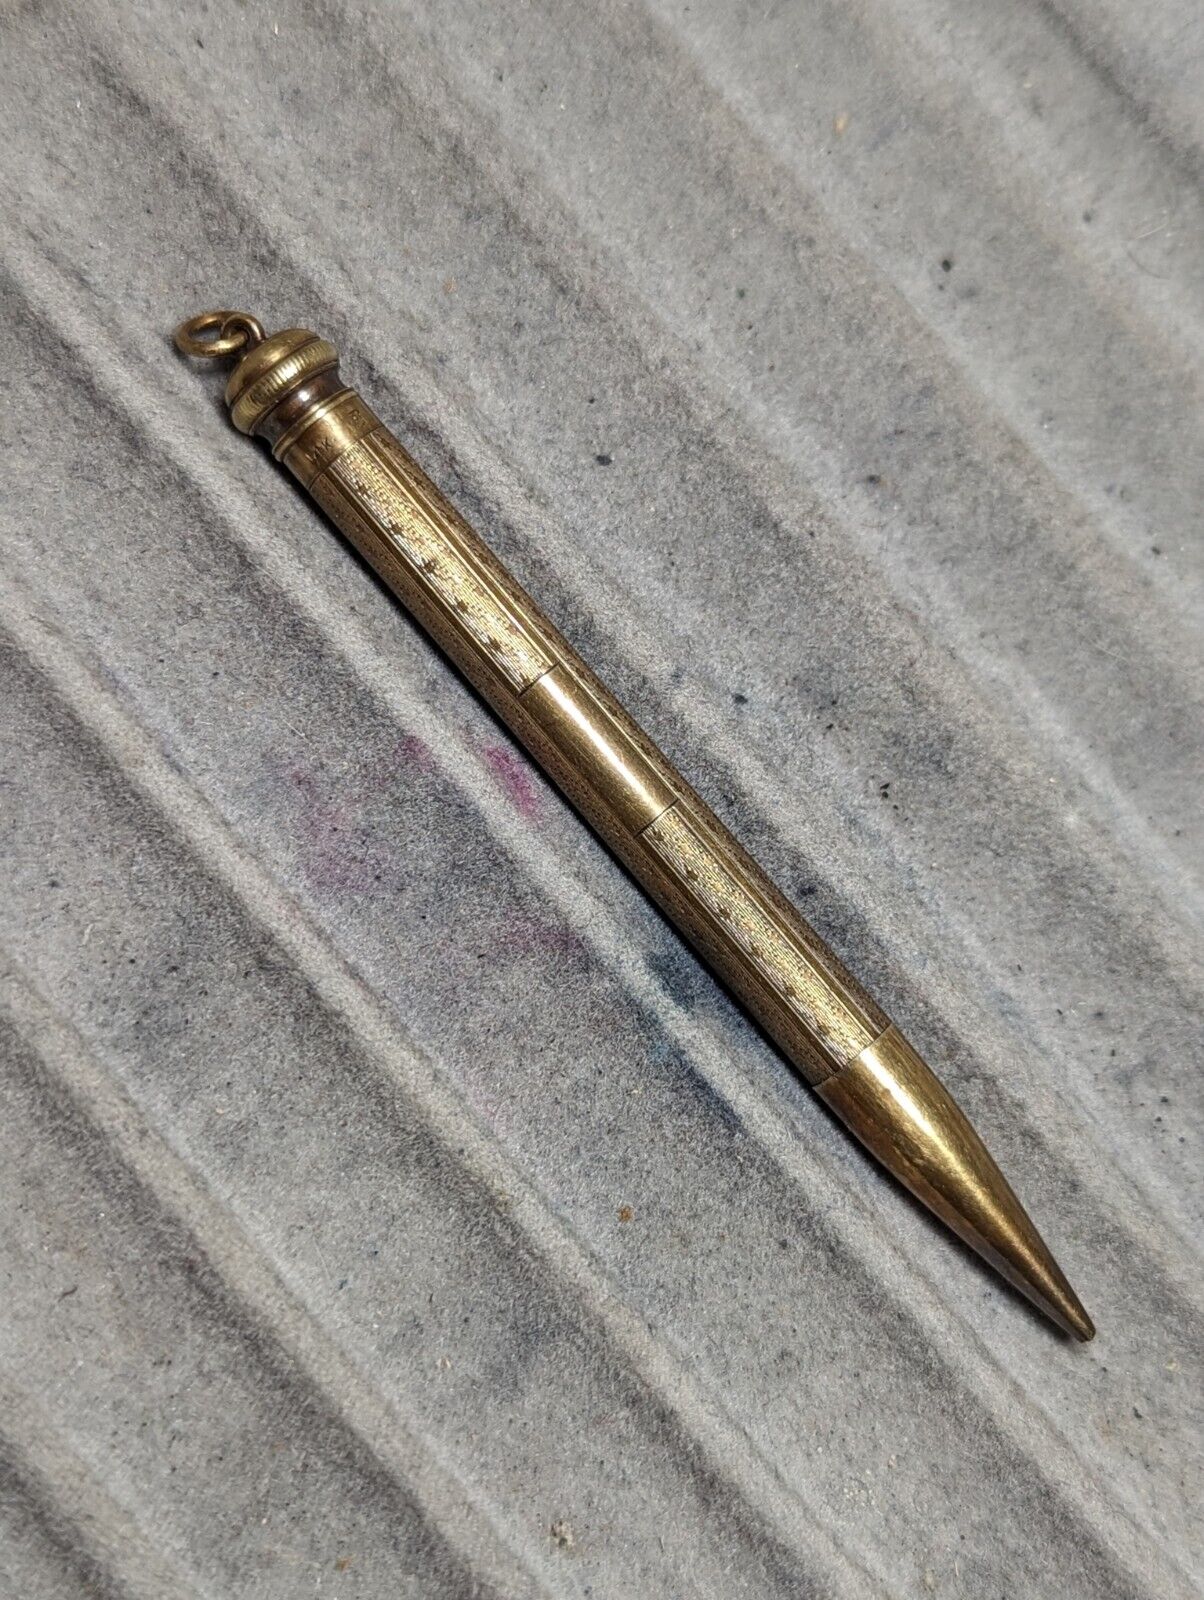 Gorgeous 14k Solid Gold Vintage Mechanical Pencil - Fairchild Or Hicks?